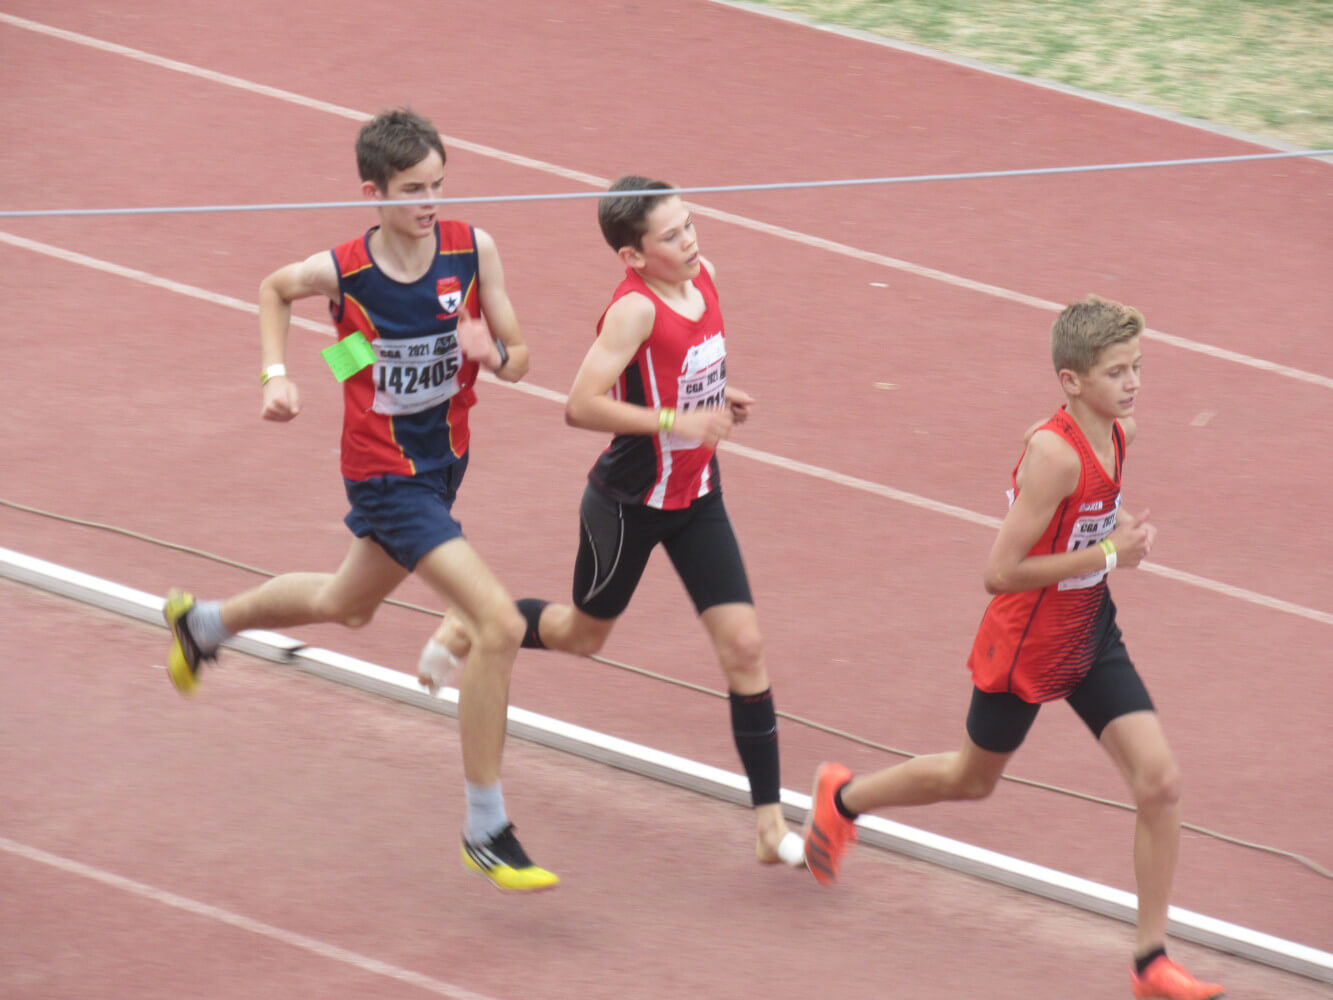 CGA - A leading group in 1,500m boys U13 - Tyran Brooks, Marthinus, Bouwer, and Nathan Walsh